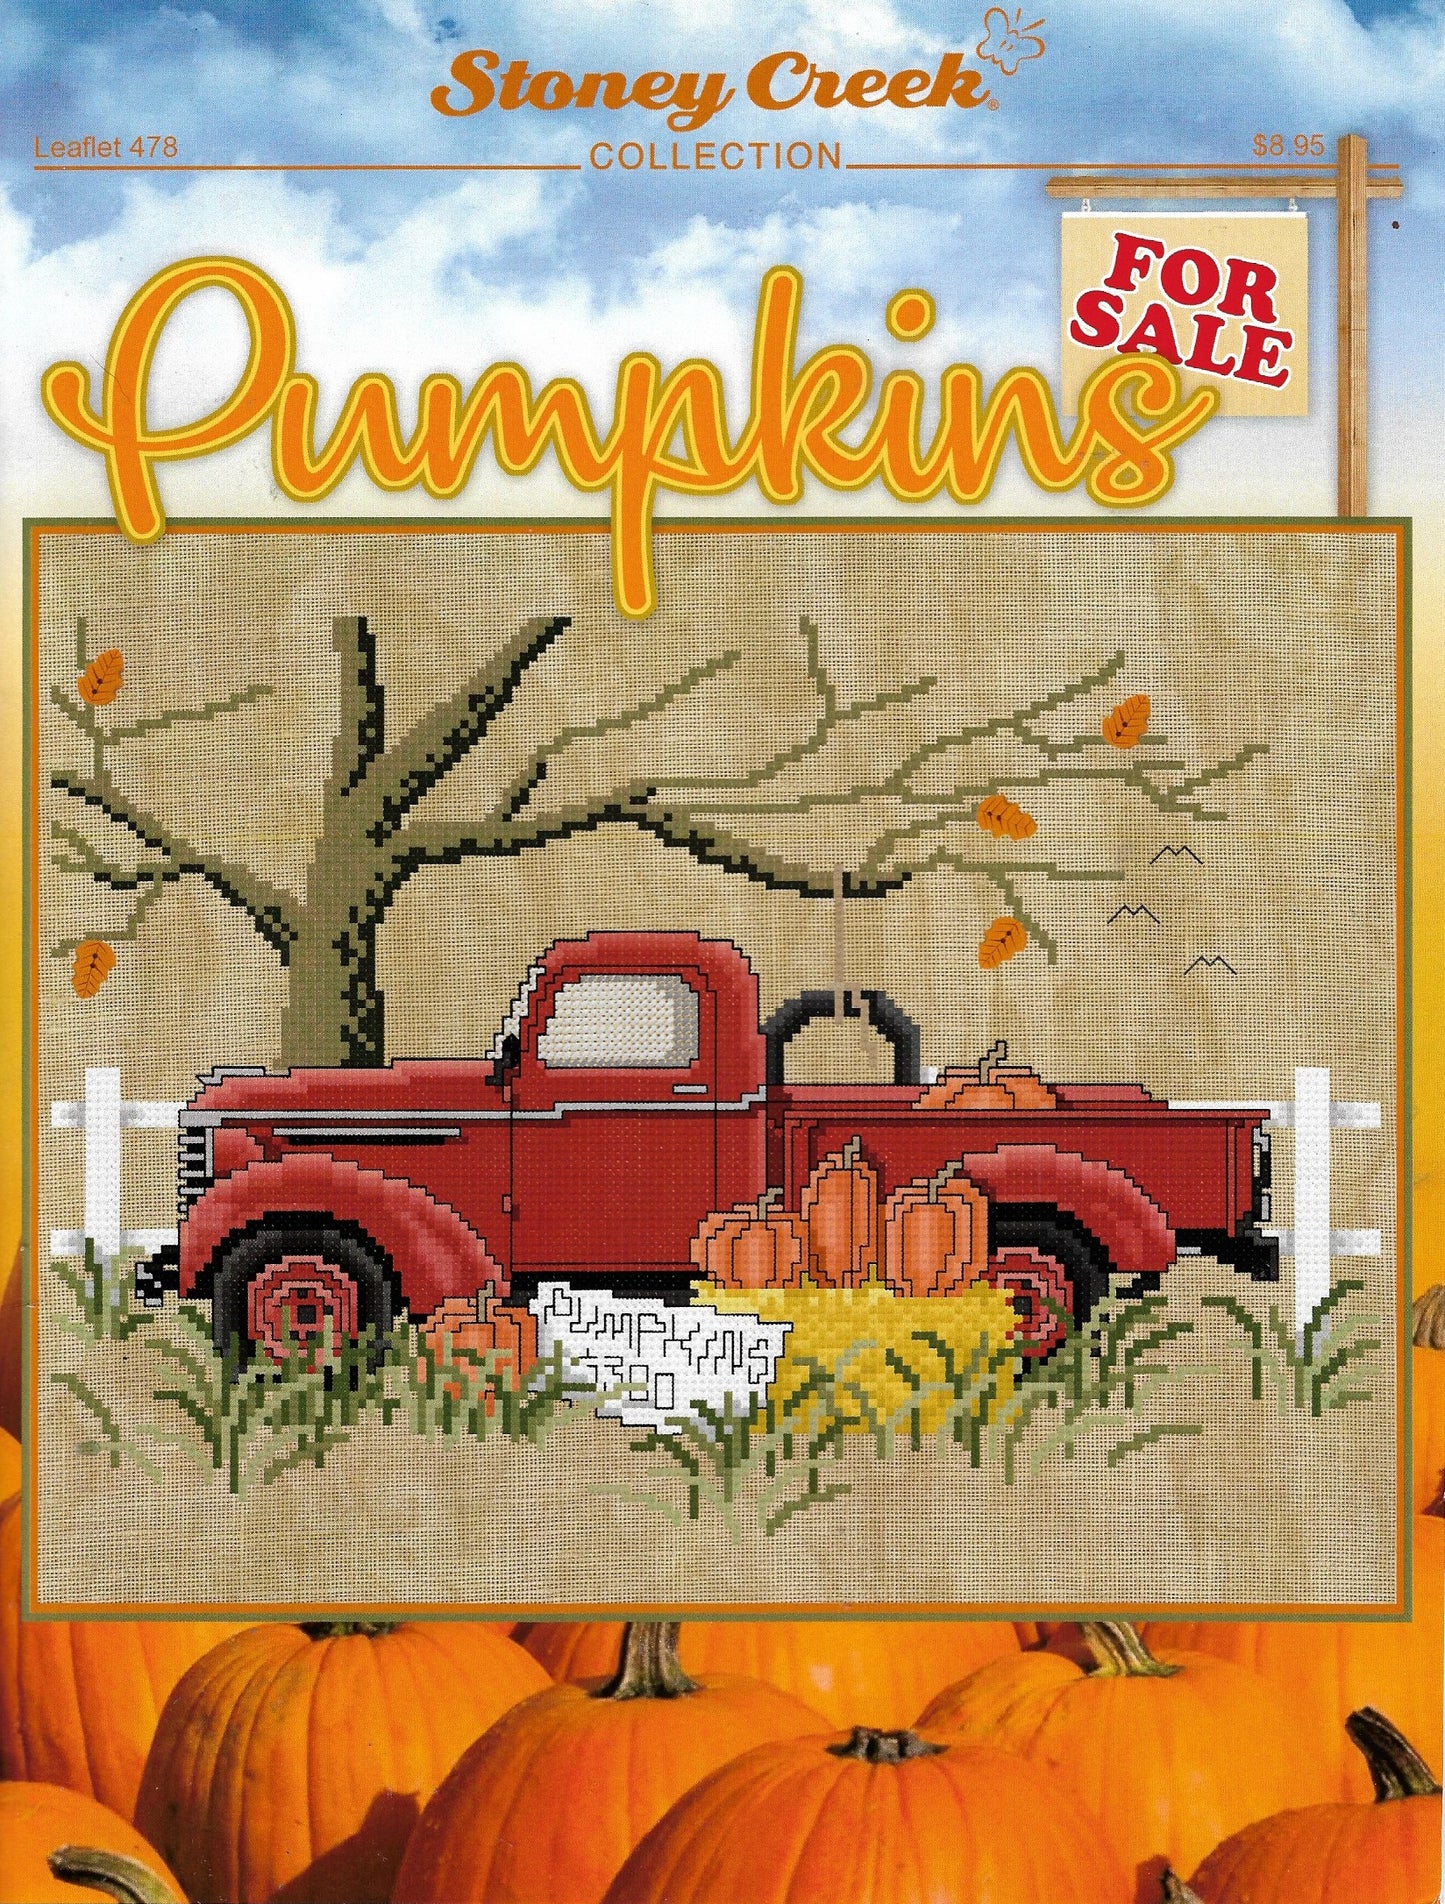 Stoney Creek Pumpkins For Sale, LFT478 cross stitch pattern